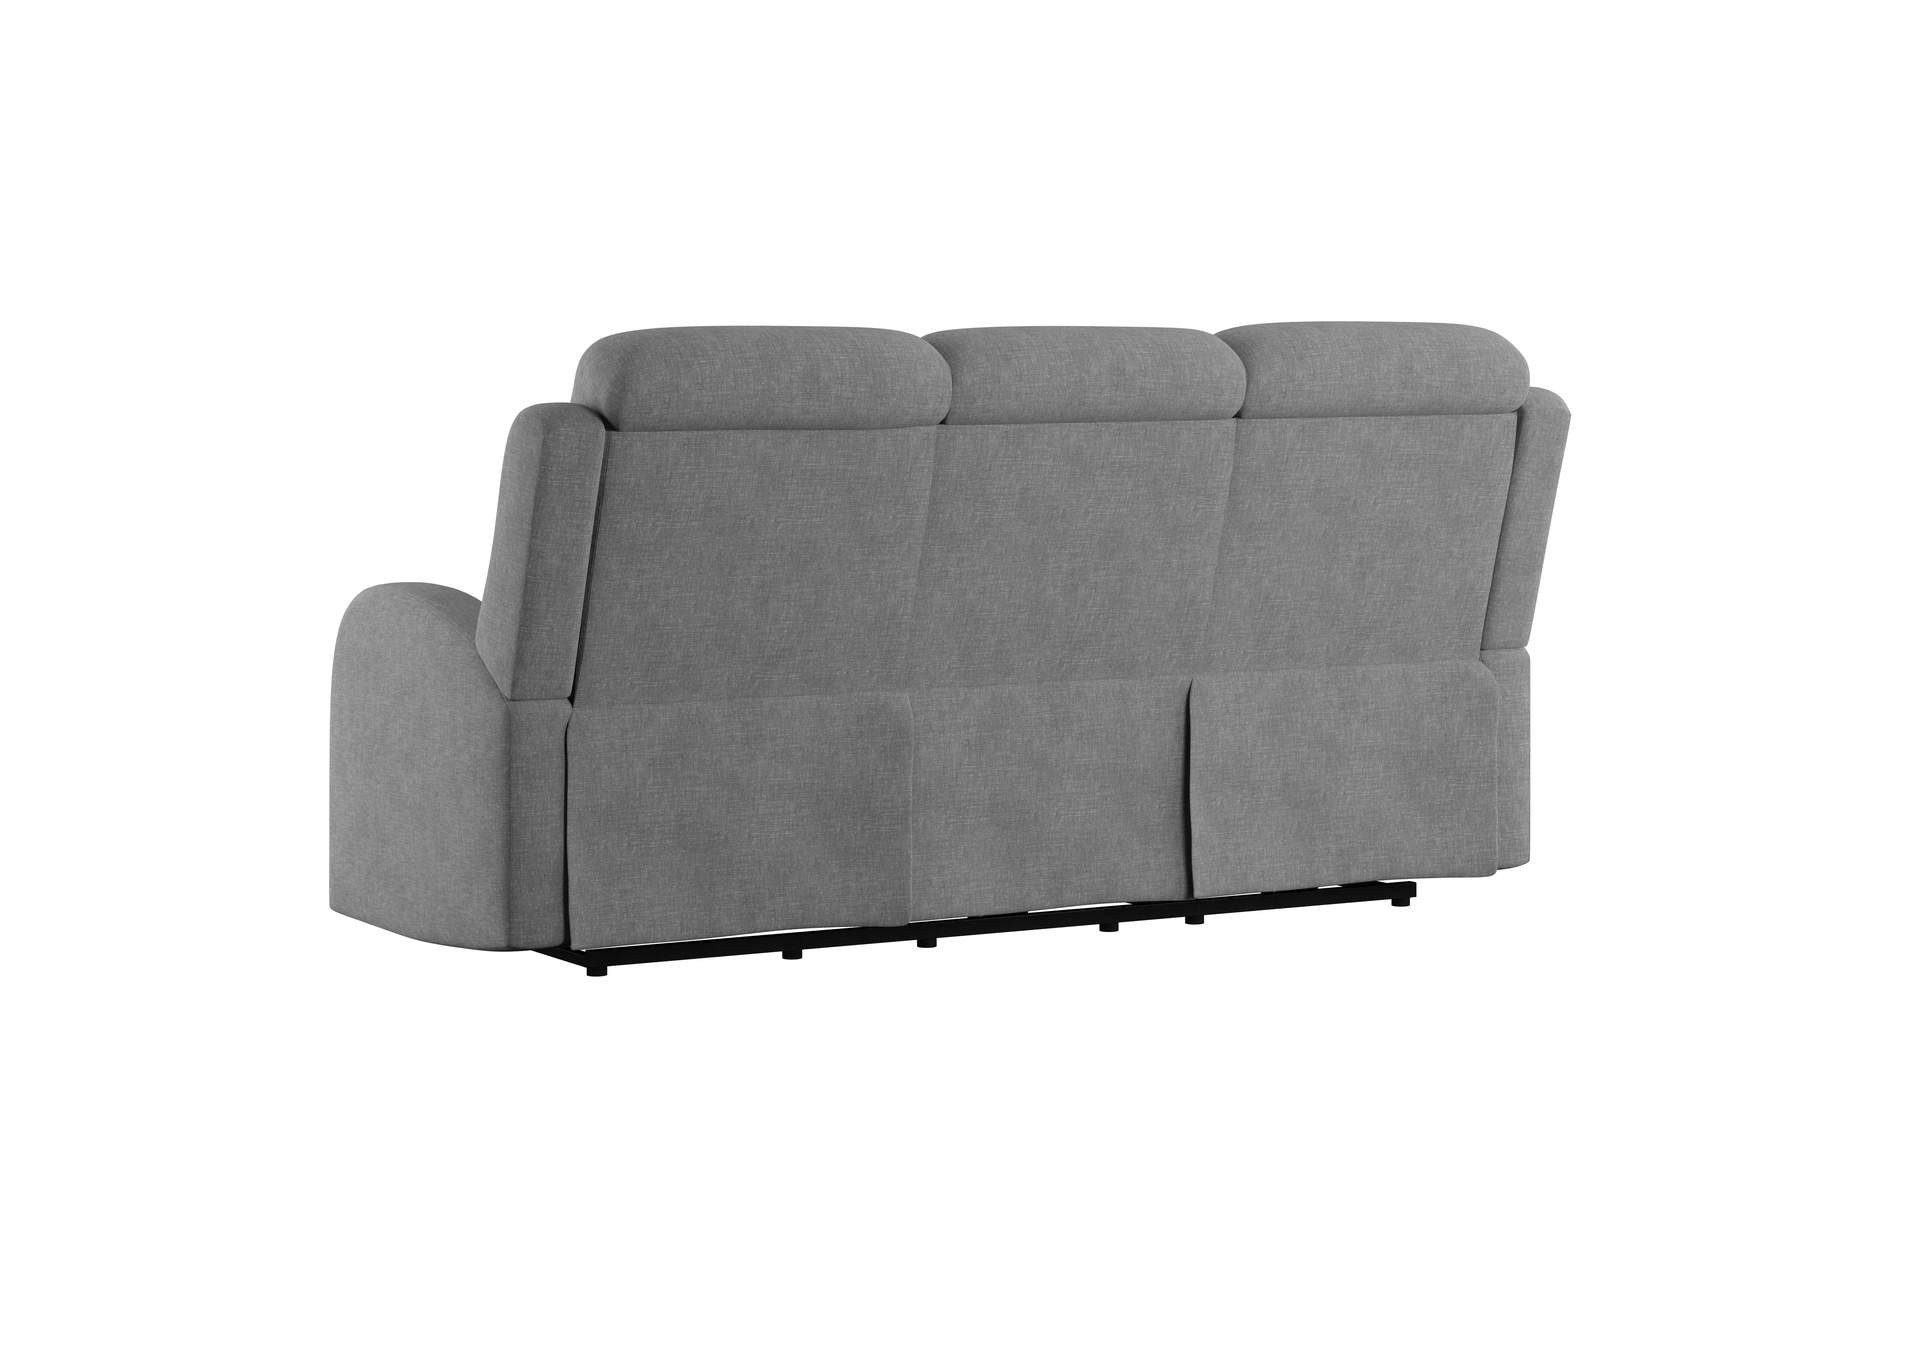 Harvey Dual Power Sofa Recliner And Headrest,Emerald Home Furnishings